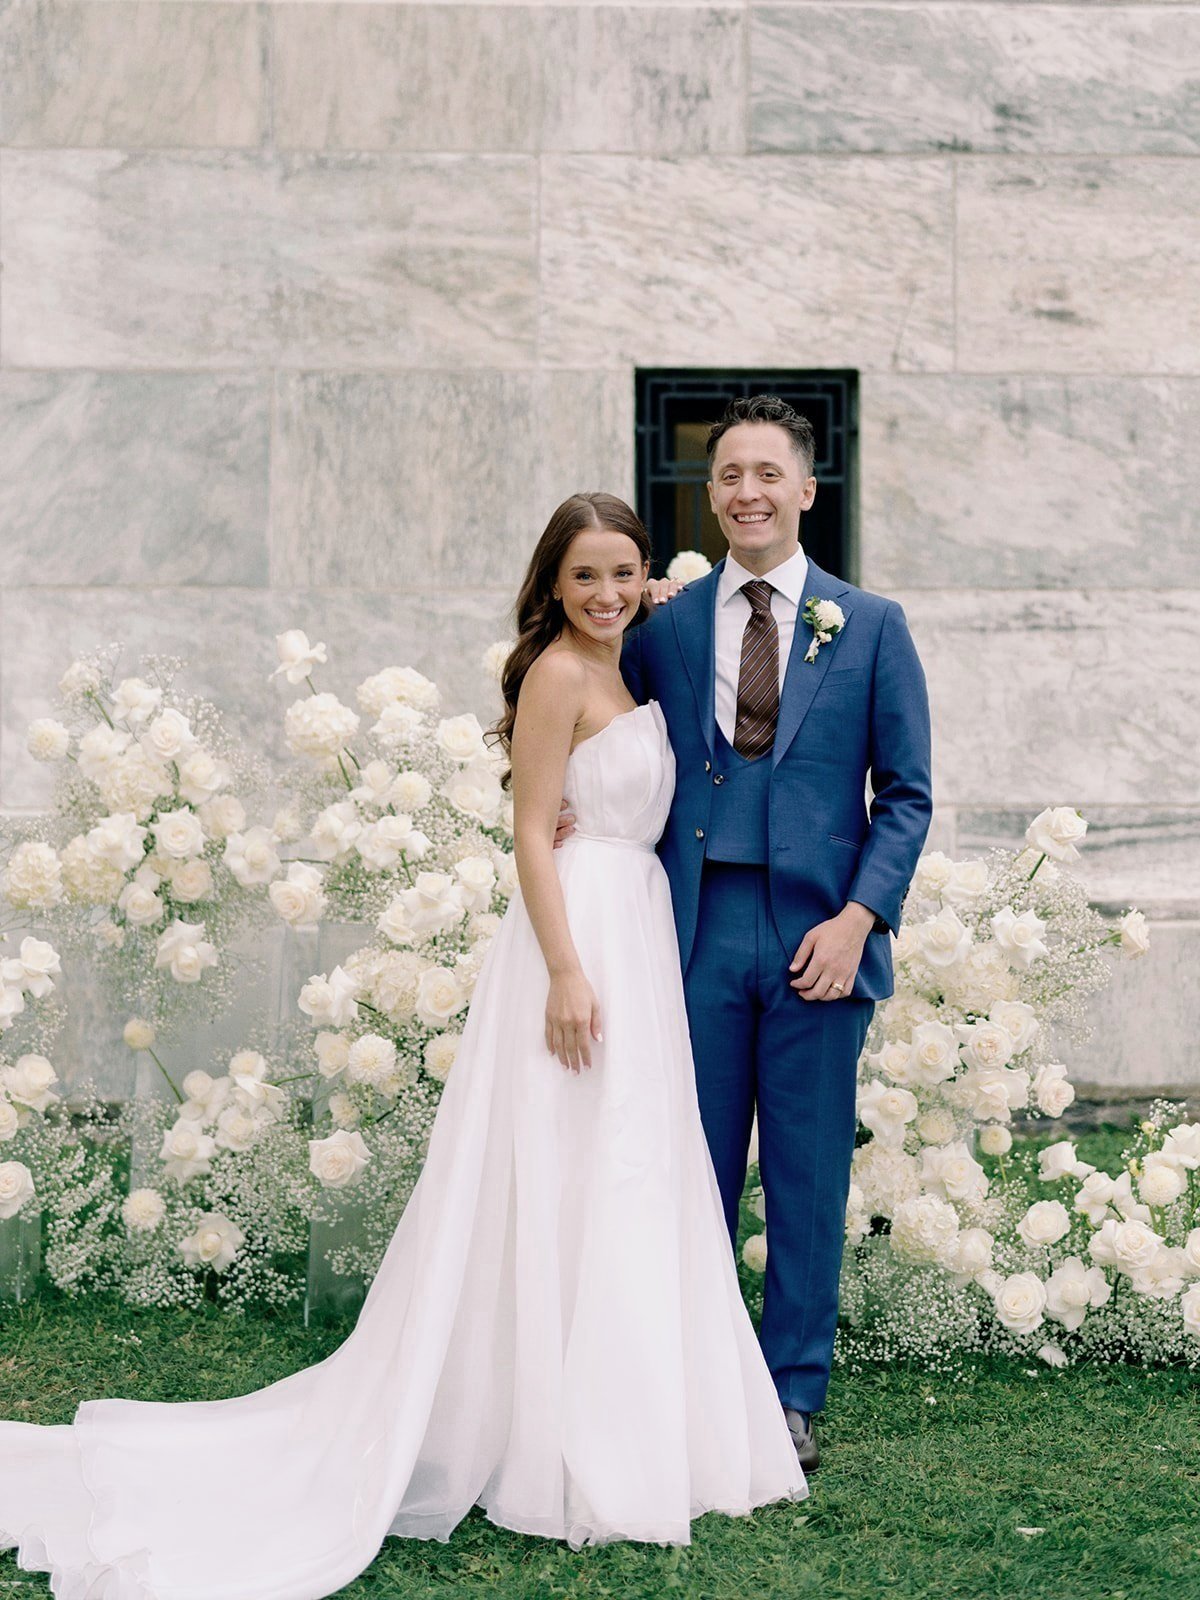 Best-Austin-Wedding-Photographers-Elopement-Film-35mm-Asheville-Santa-Barbara-1033.jpg